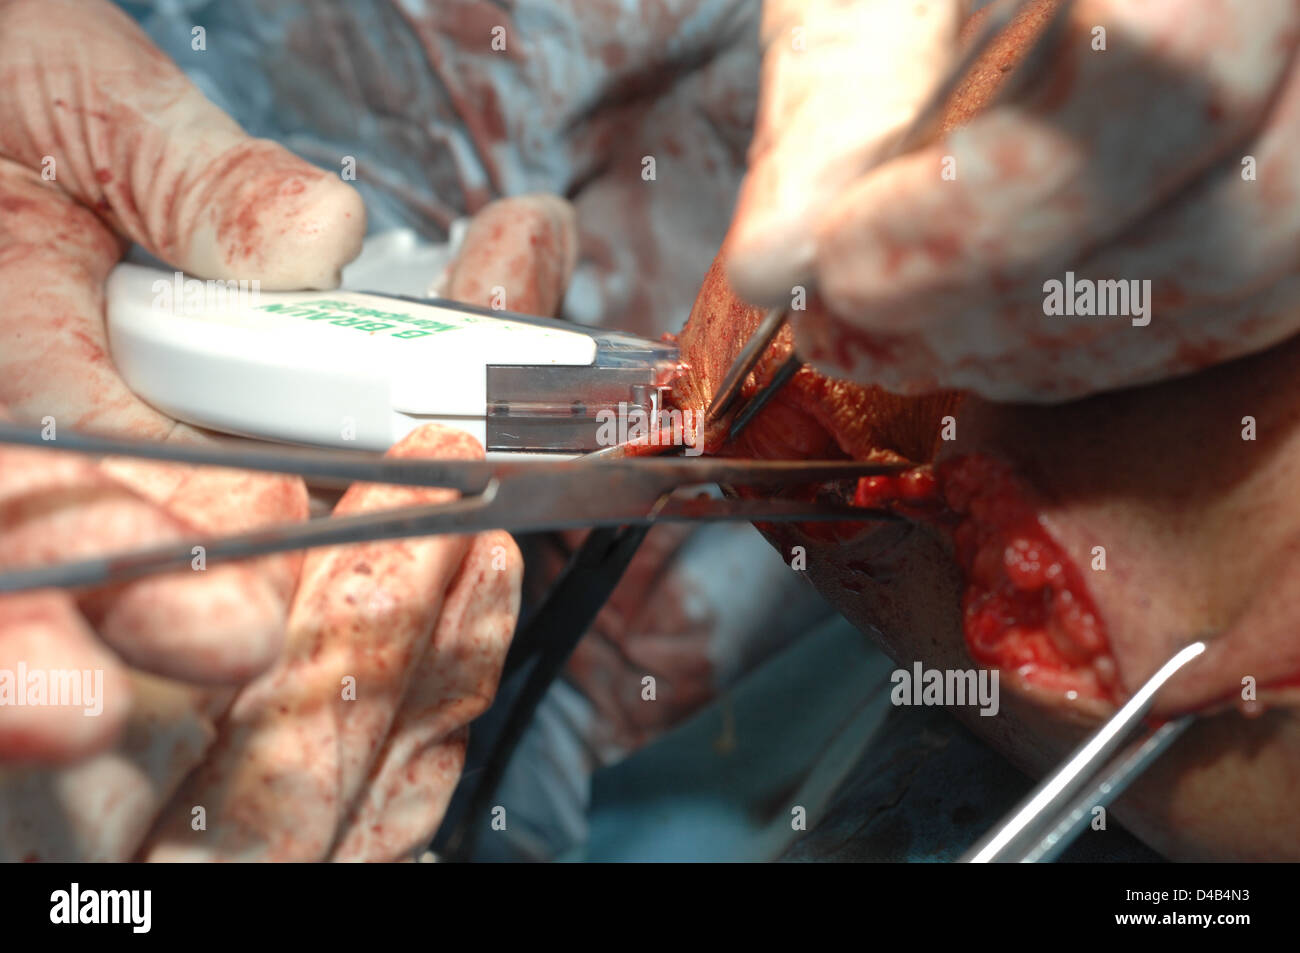 Grapas quirurgicas fotografías e imágenes de alta resolución - Alamy